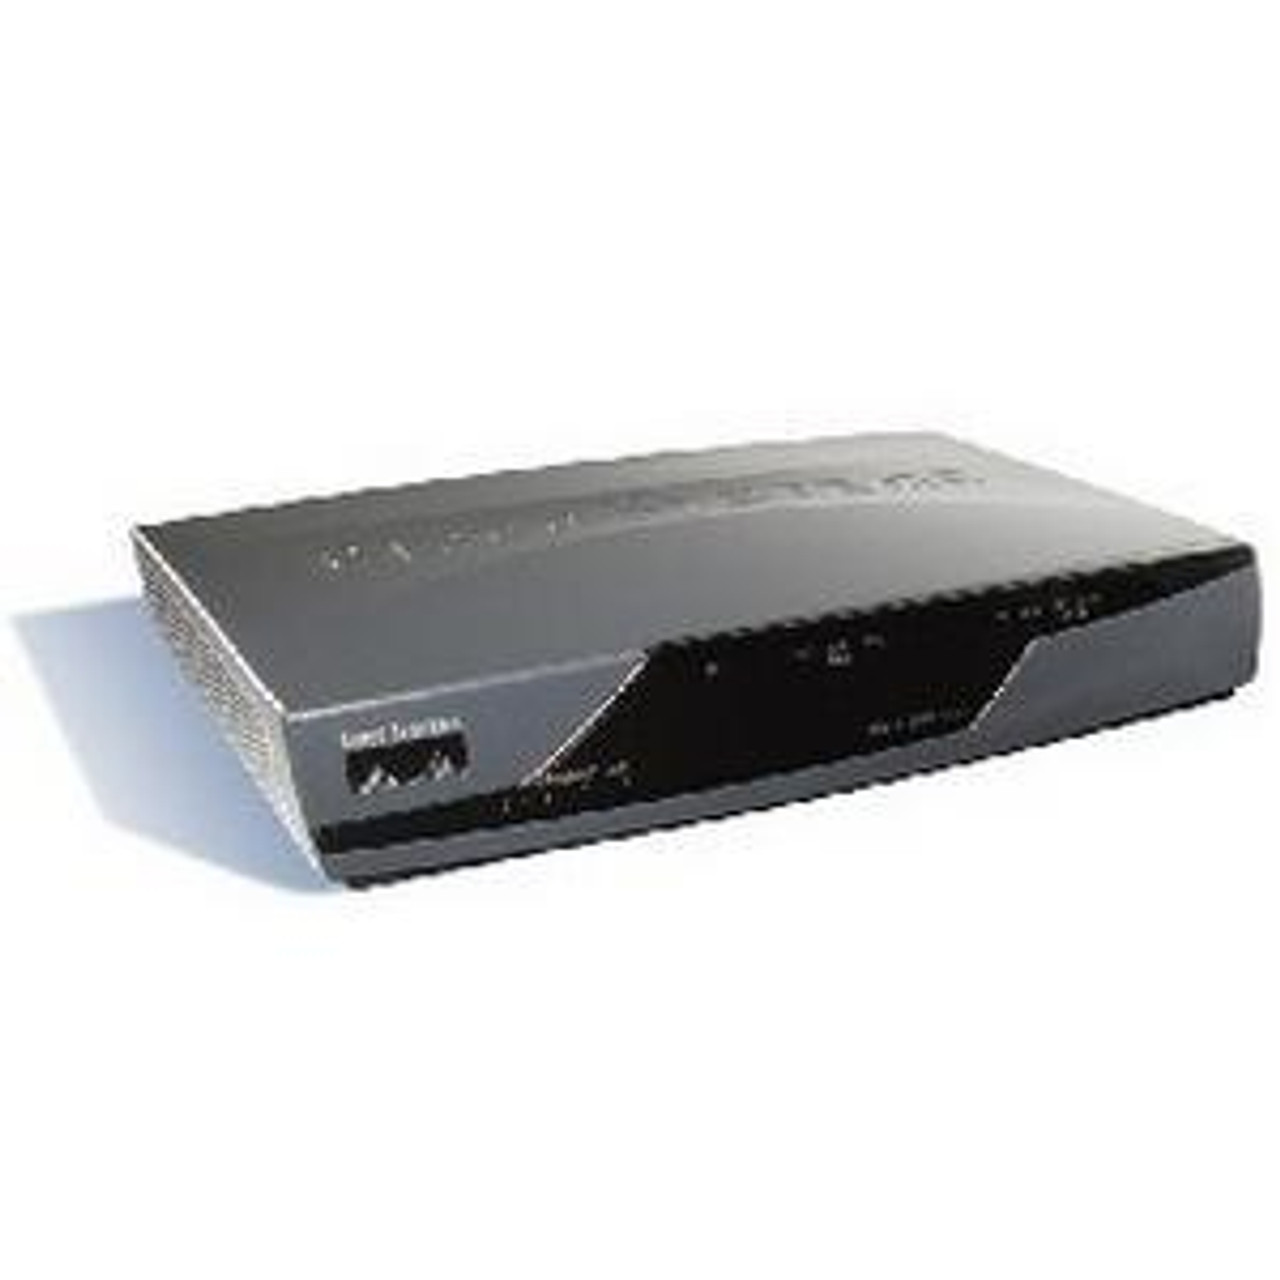 CISCO877-SEC-K9 - Cisco Router 877 Ethernet Security Bundle 10/100Mbps 4Ports With Plus Feature Set (Refurbished)